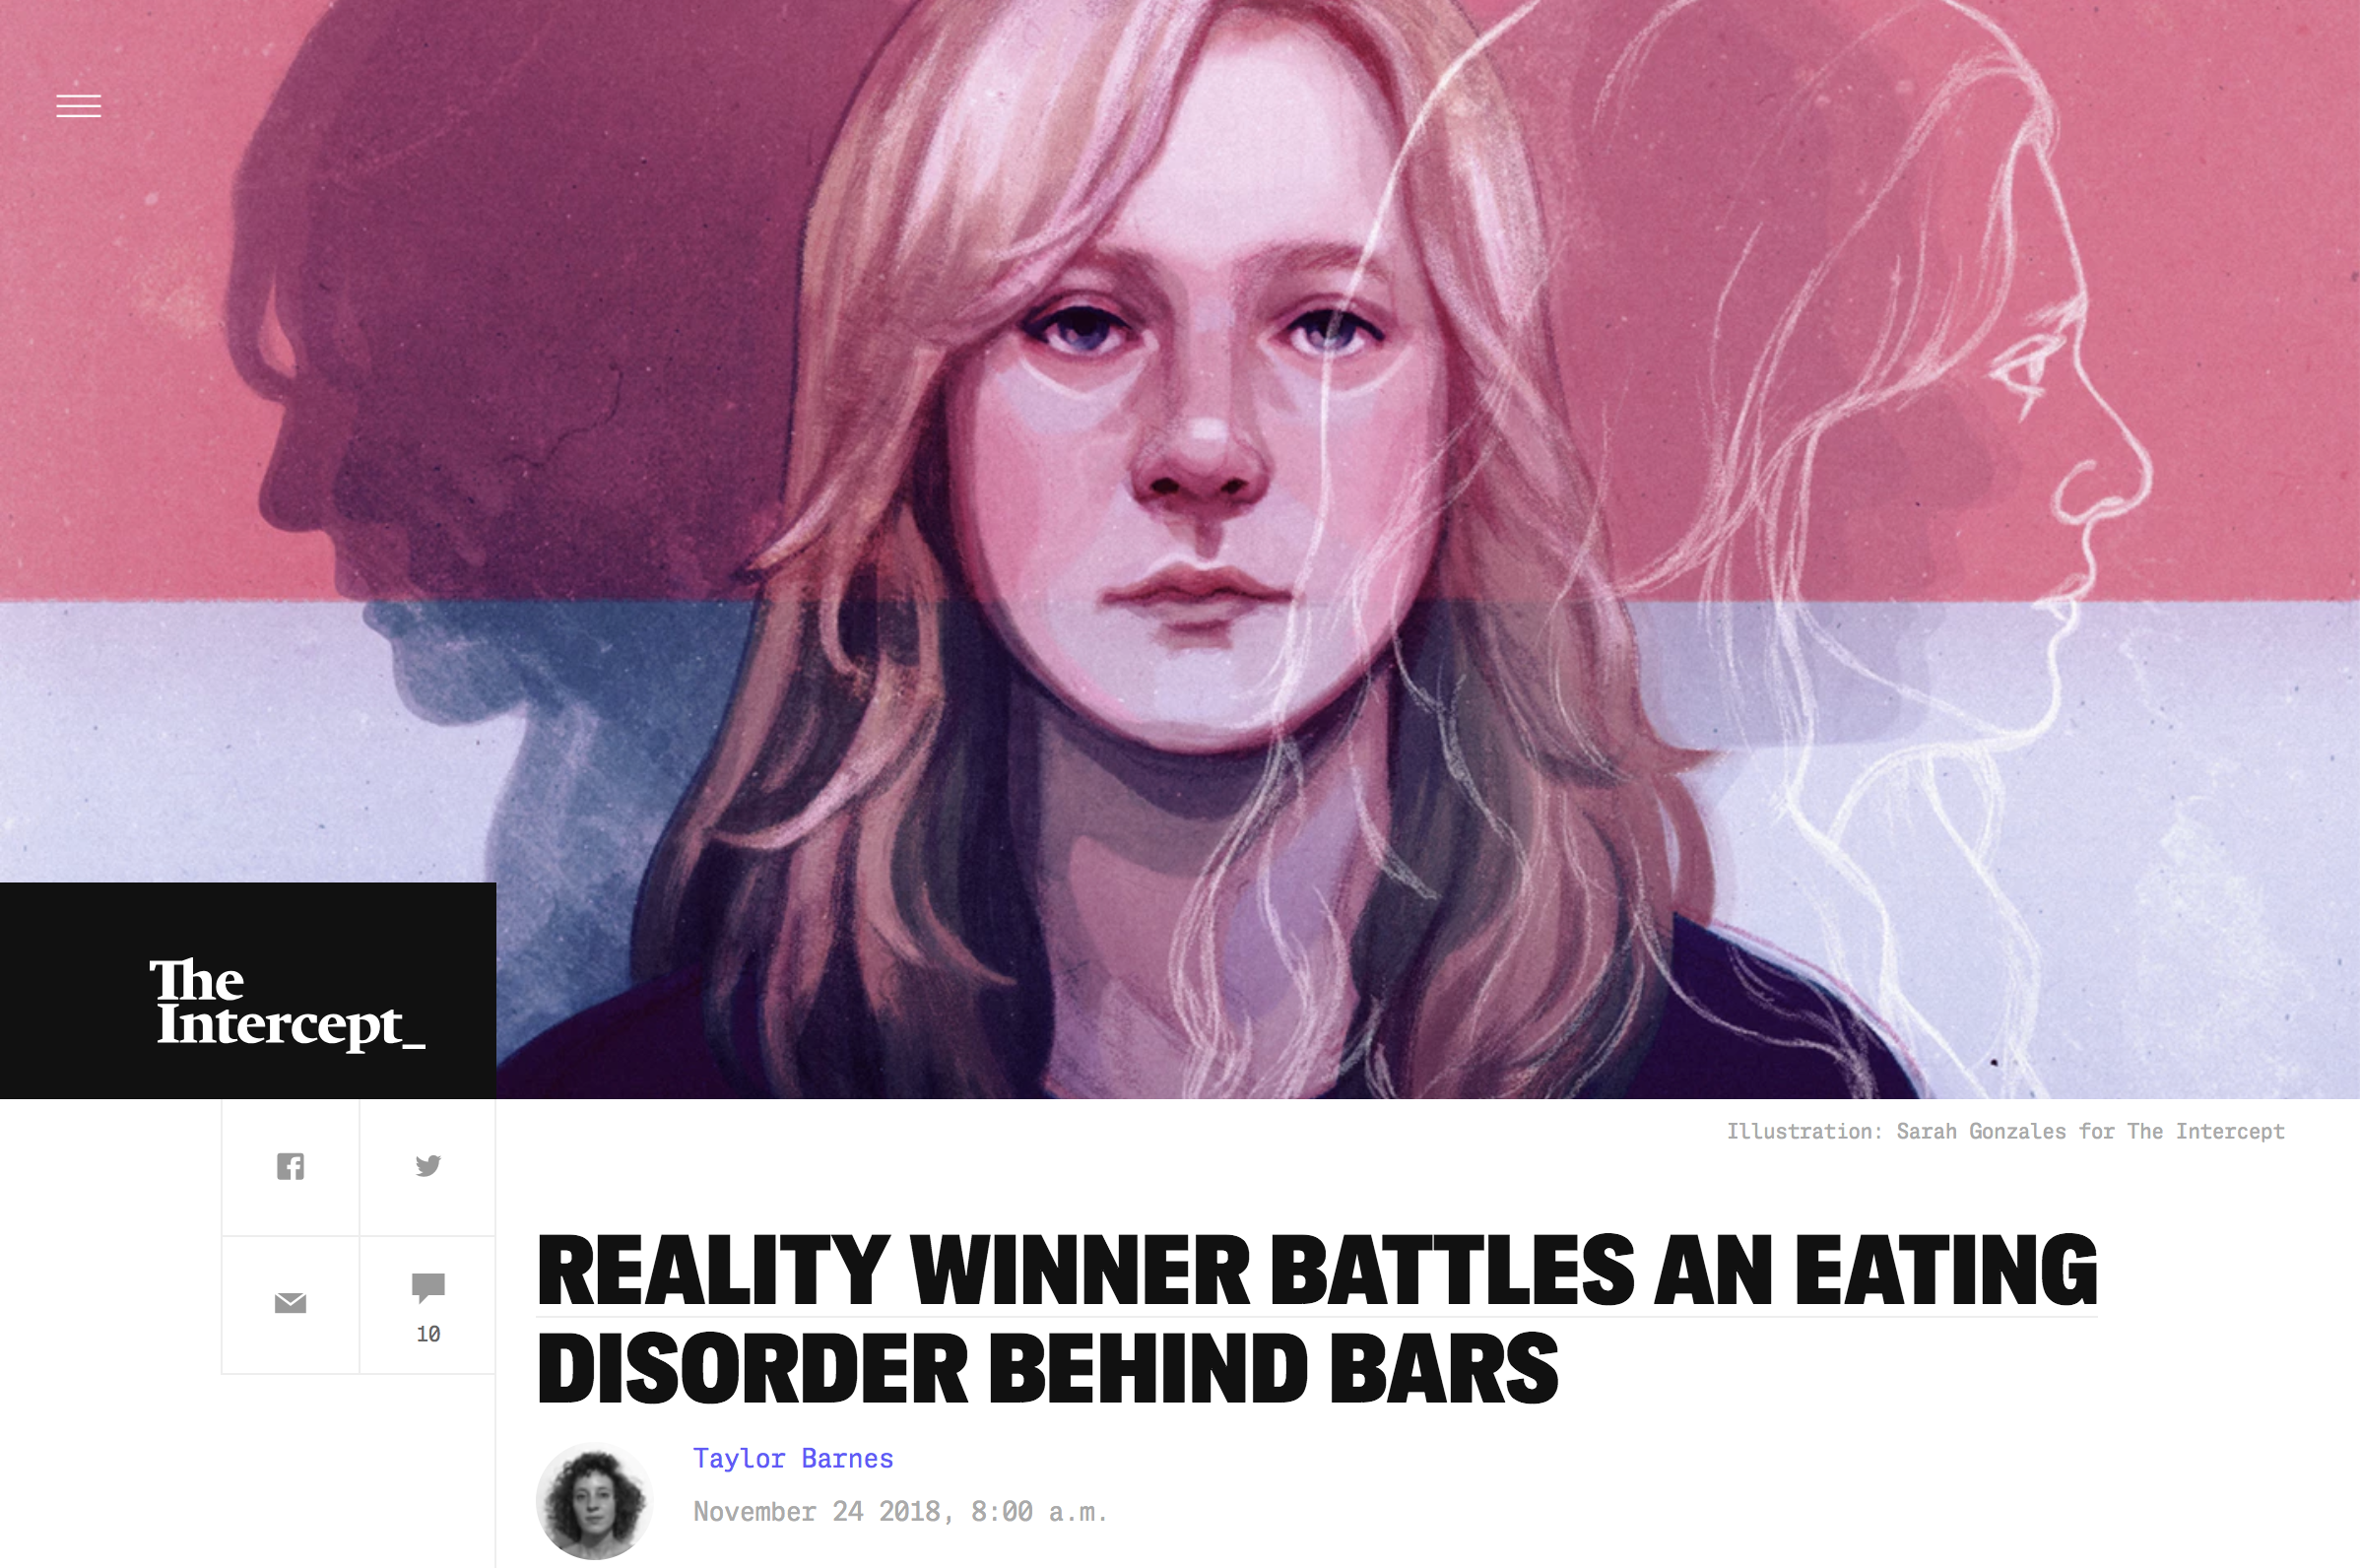  Illustration:  Sarah Gonzales   Art Direction: Ariel Zambelich  Story:  Reality Winner Battles An Eating Disorder Behind Bars  